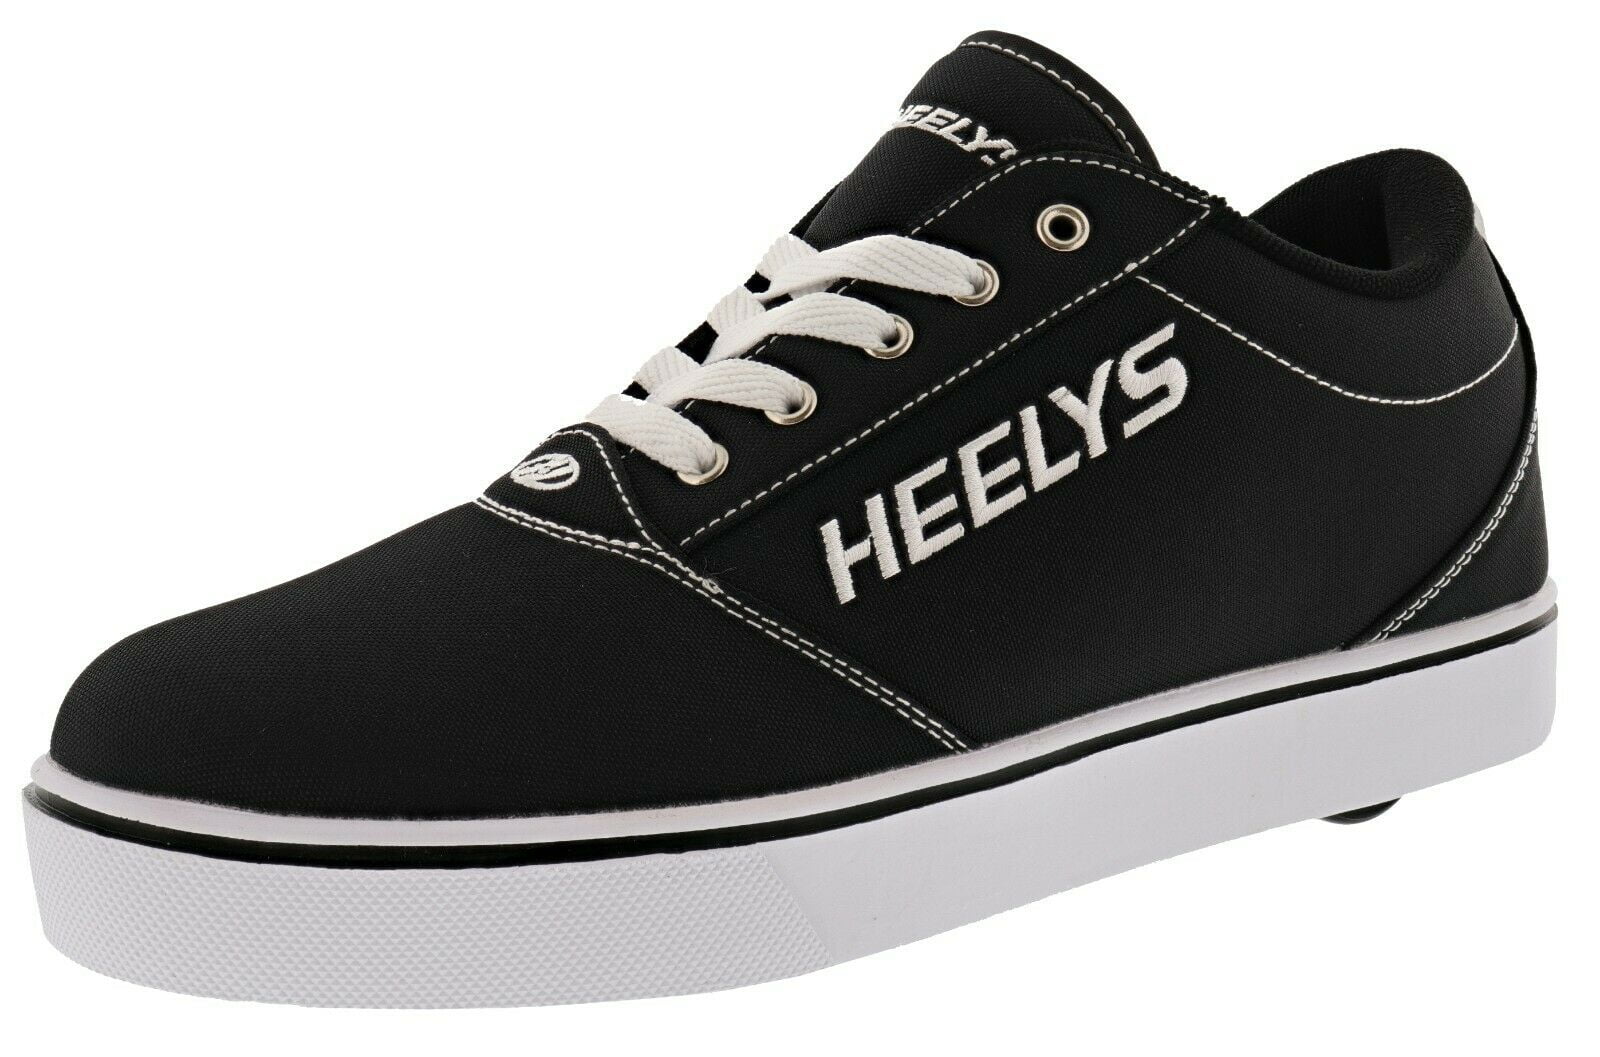 Heelys HEELYS Motion Plus 770991 Skate Shoes Kids SIZE YOUTH 2 Athletic Sneakers Black 